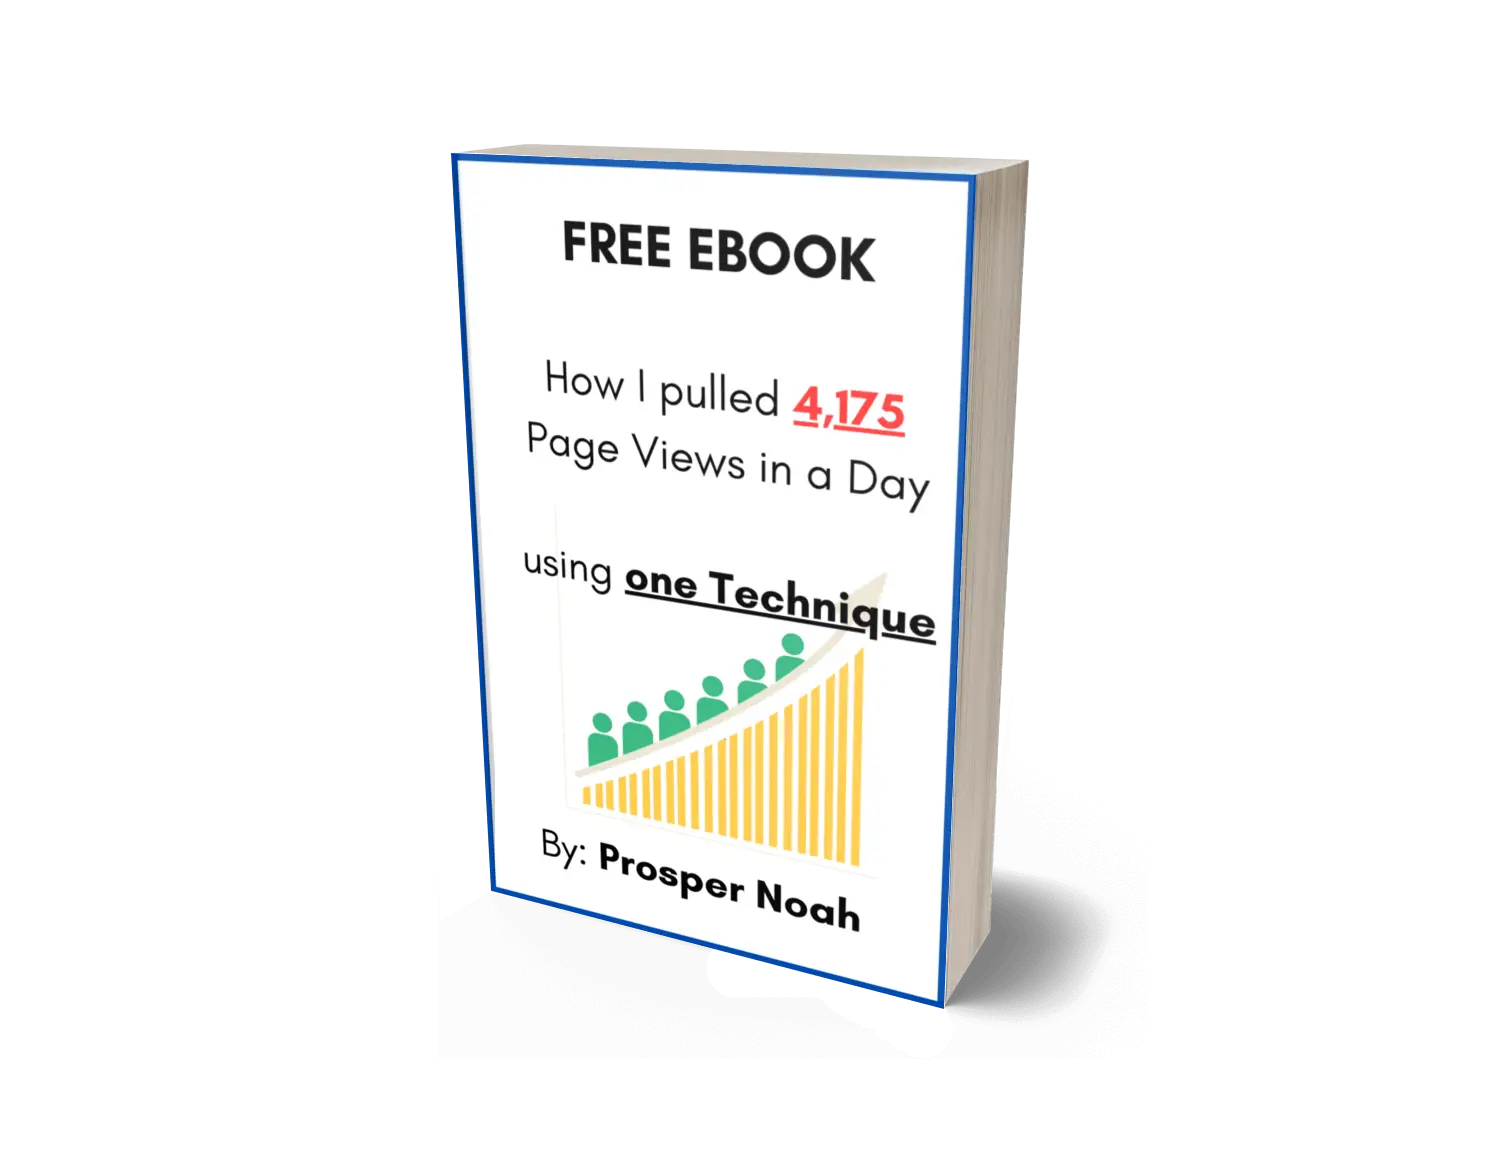 Free eBook by Prosper Noah of Tipsonblogging